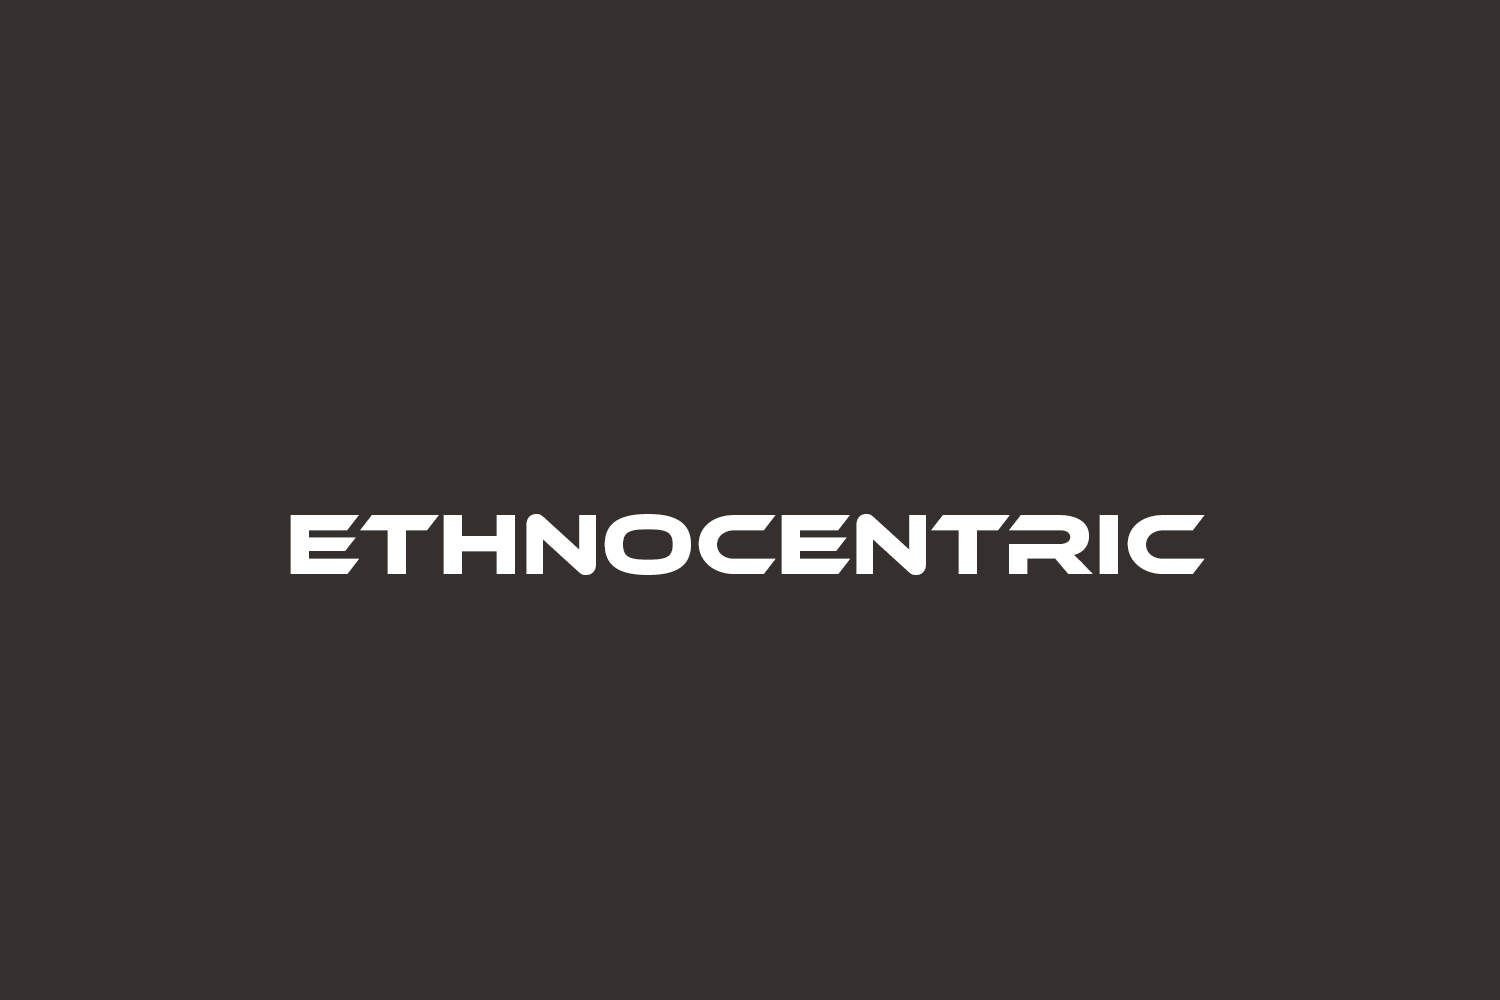 Ethnocentric